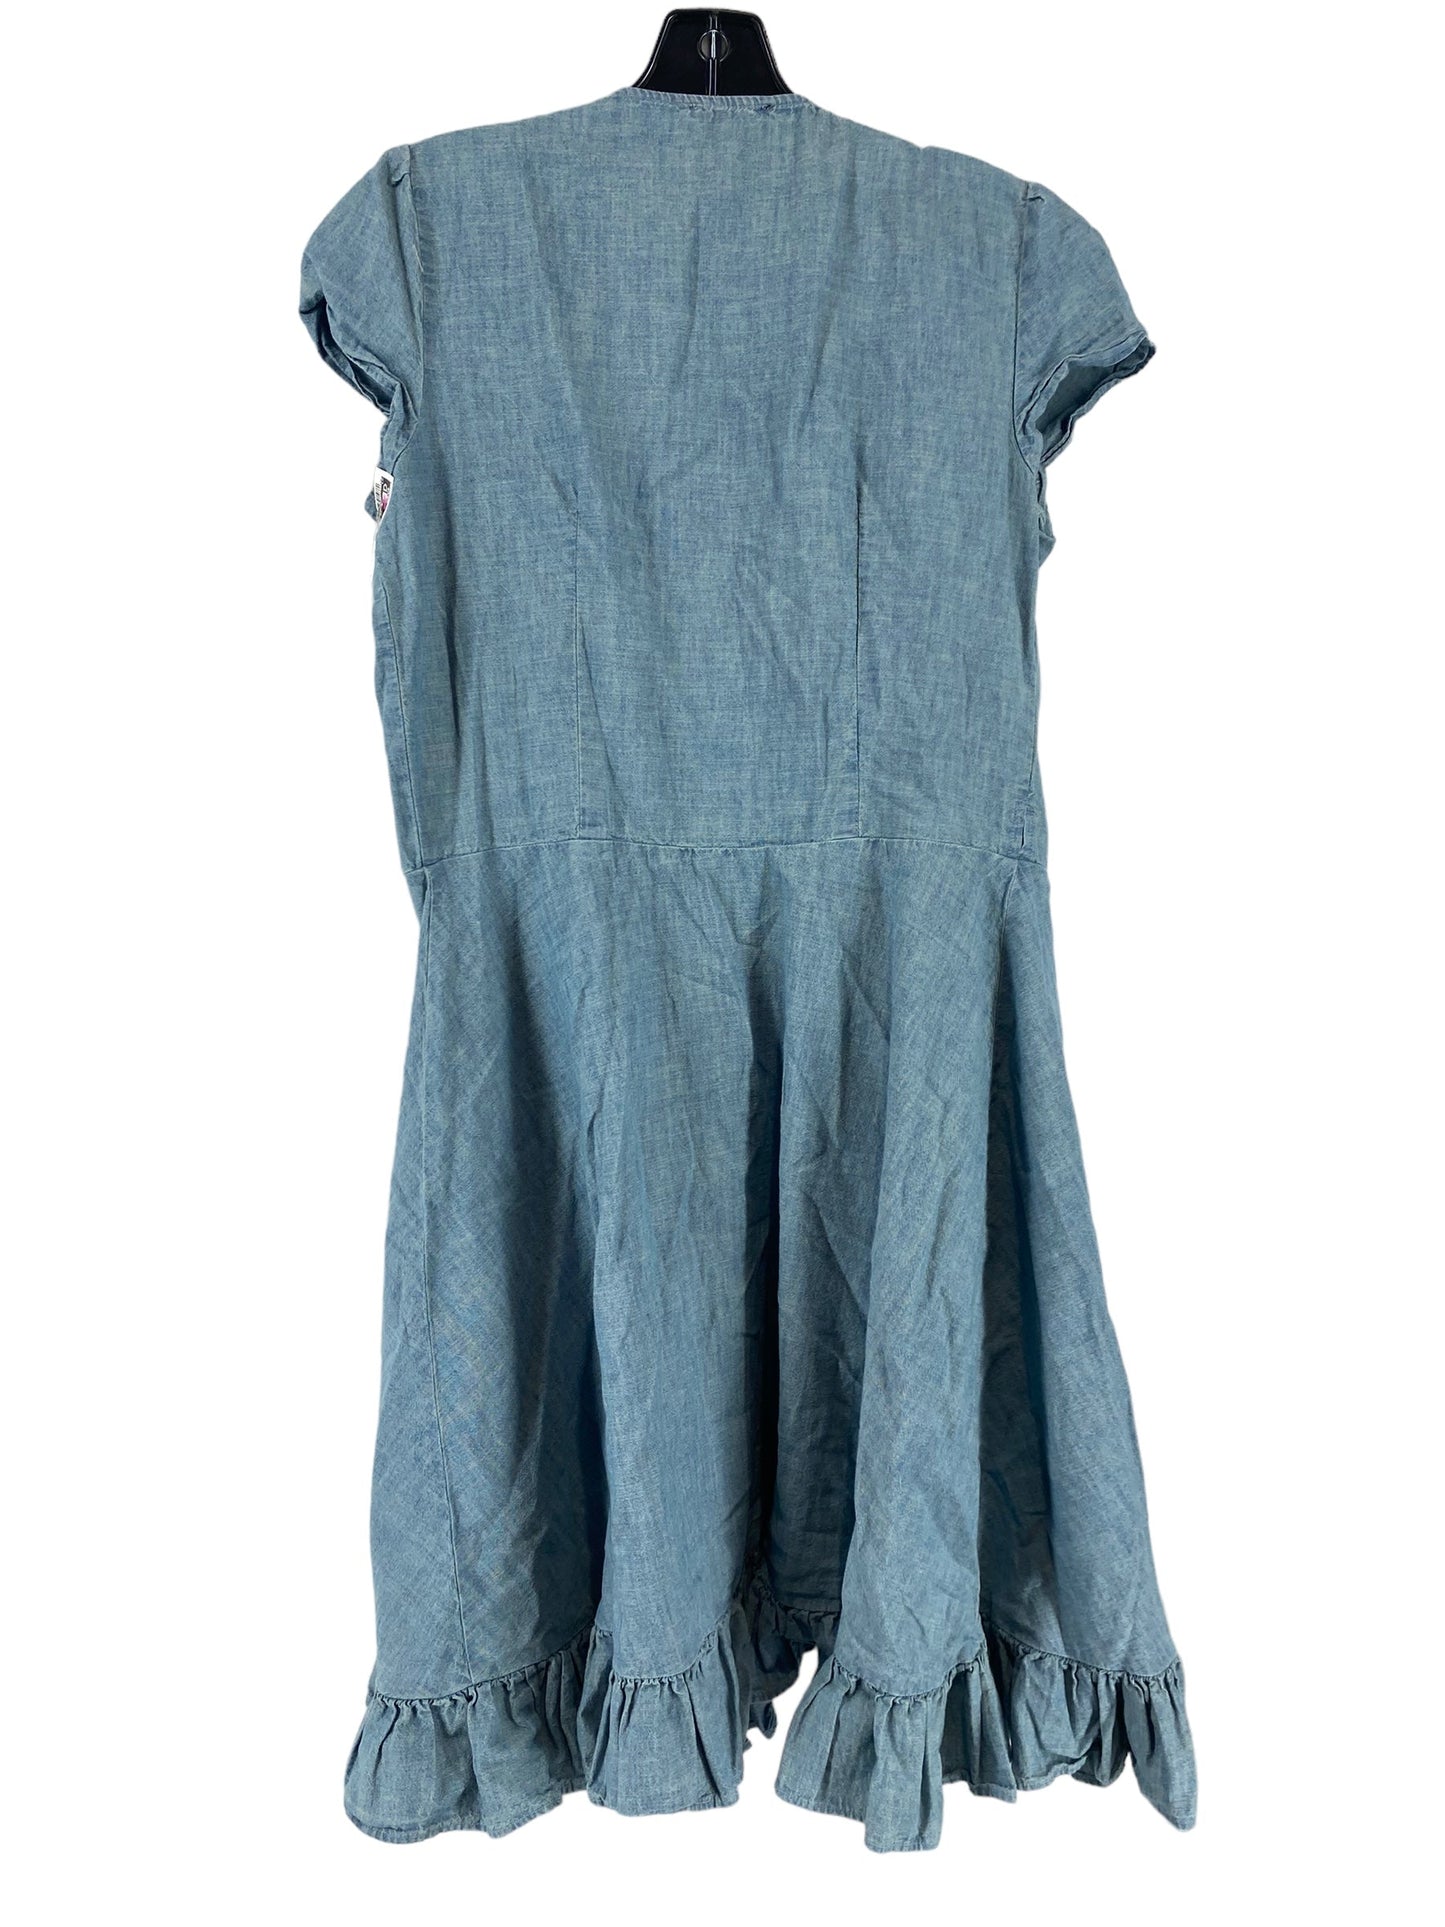 Blue Denim Dress Casual Midi Polo Ralph Lauren, Size 4